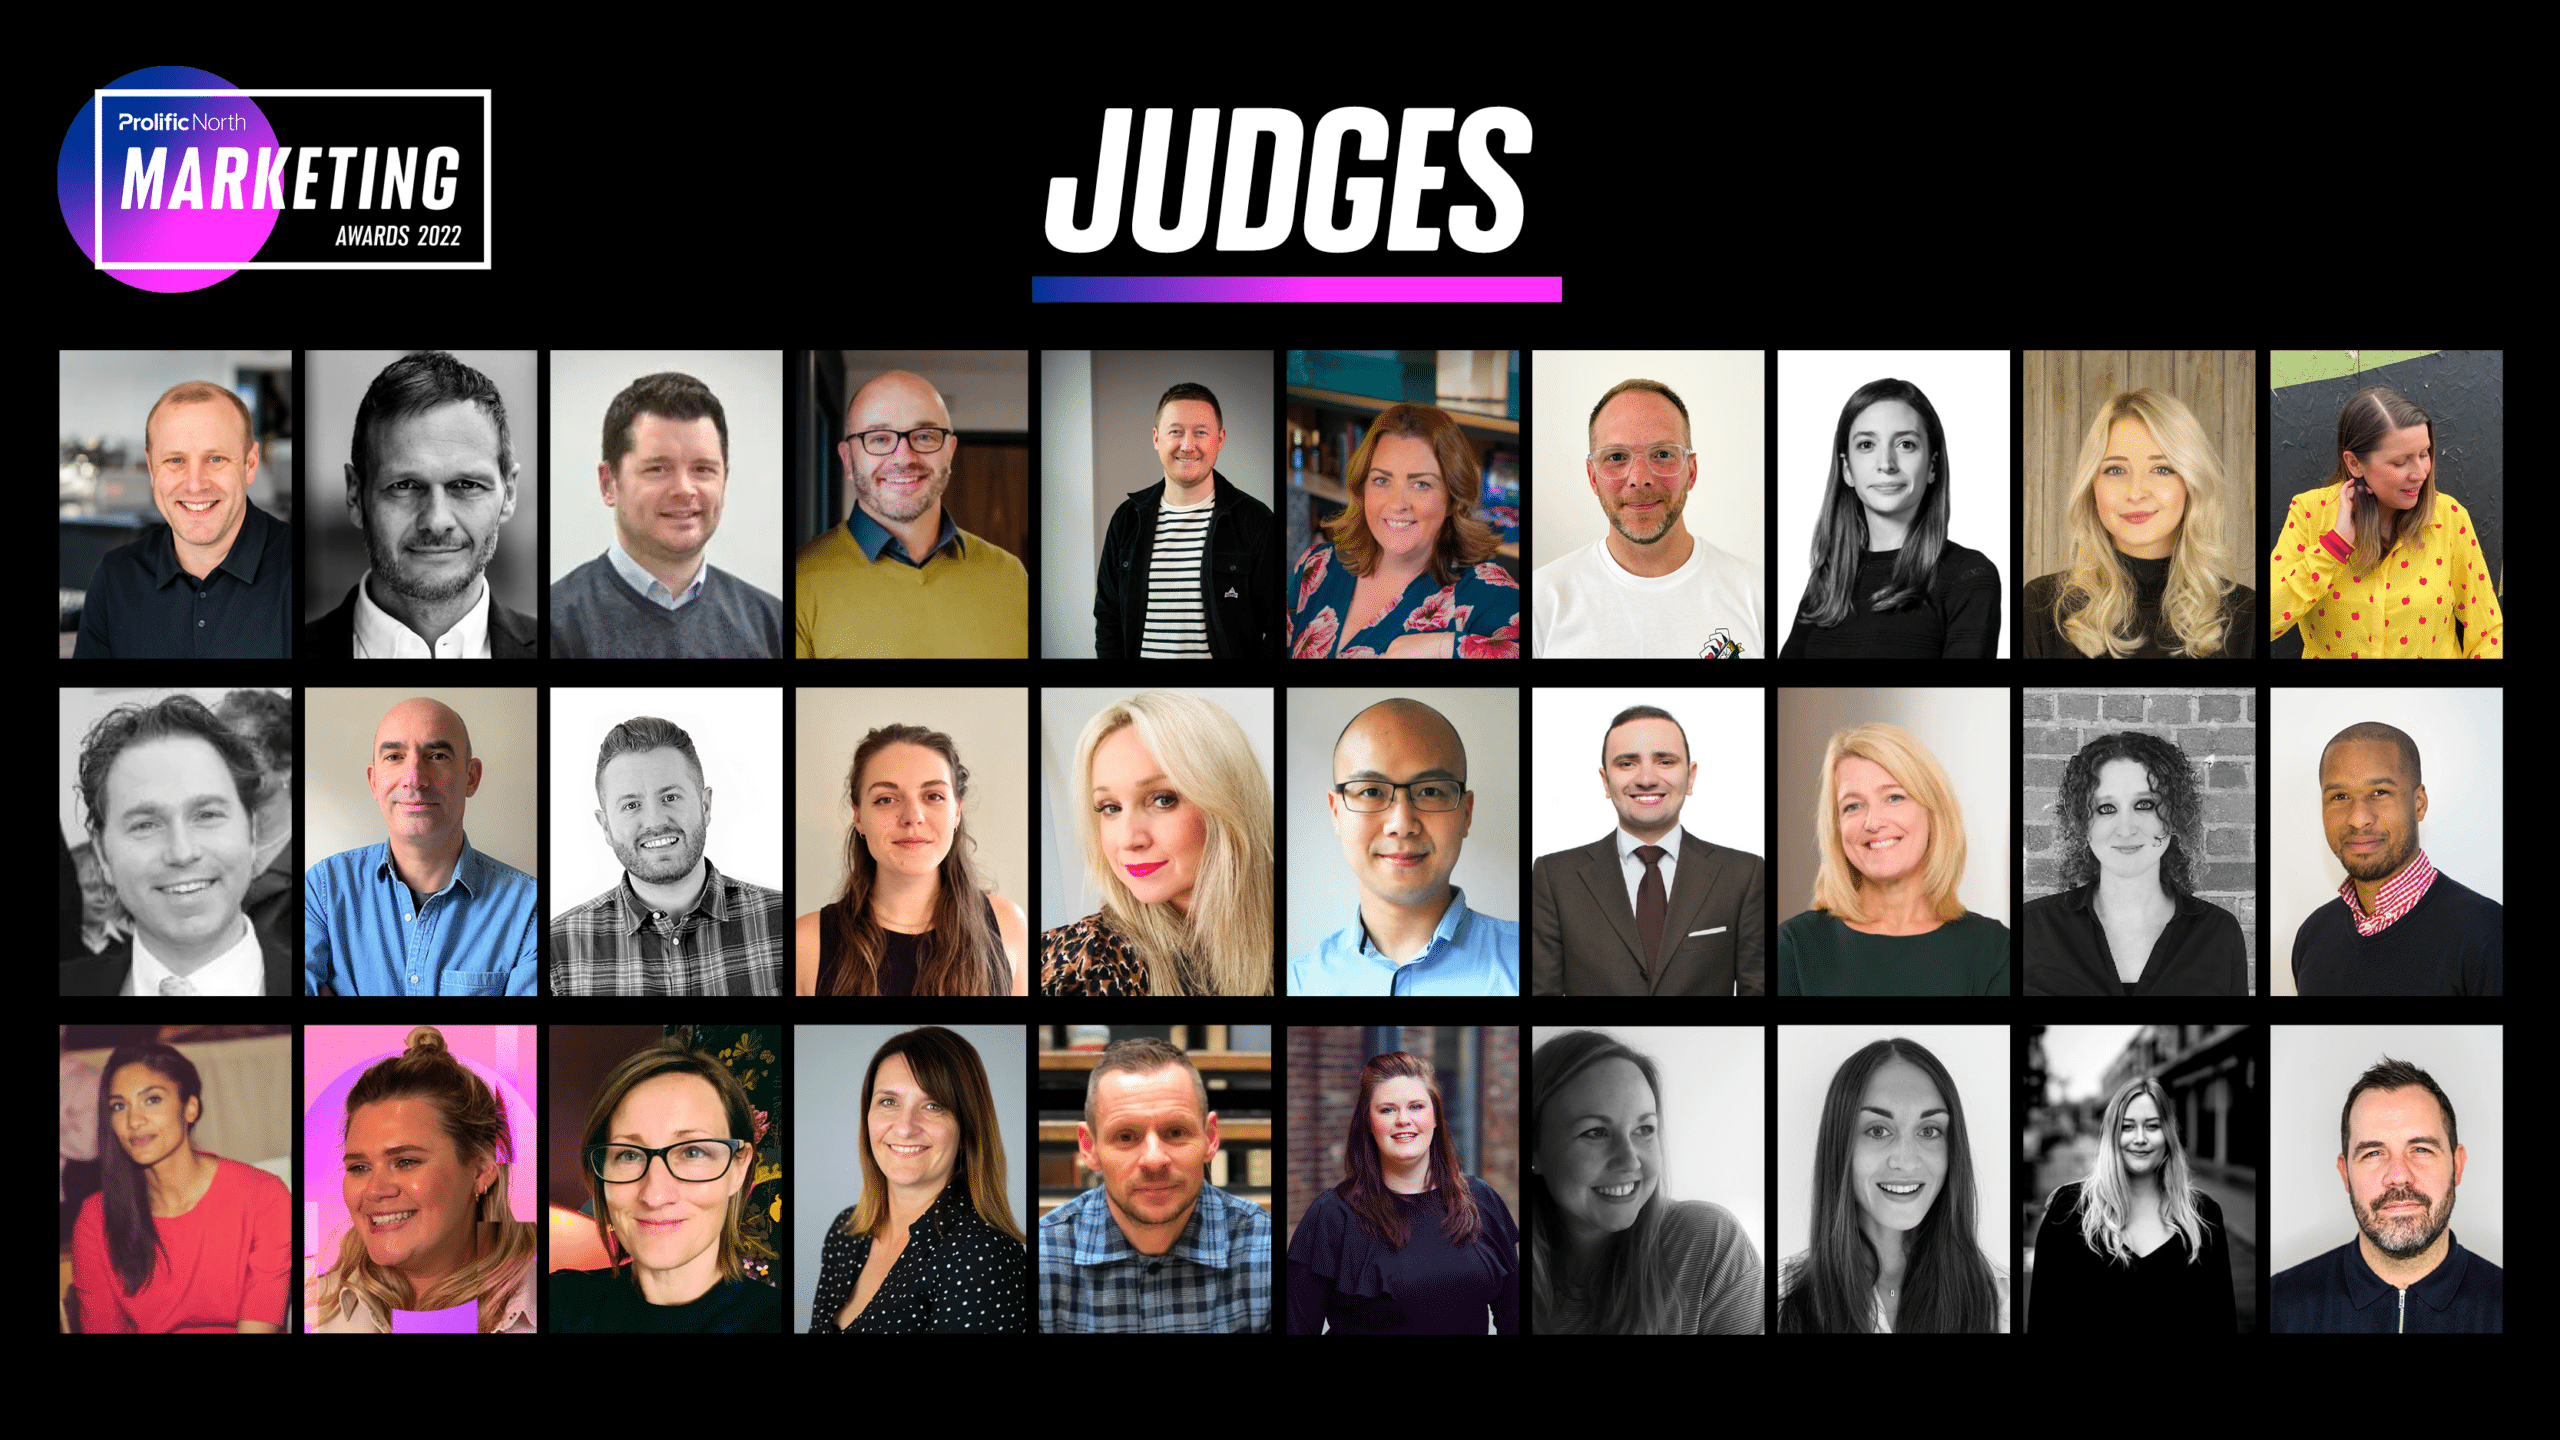 Prolific North Marketing Awards 2022 judges